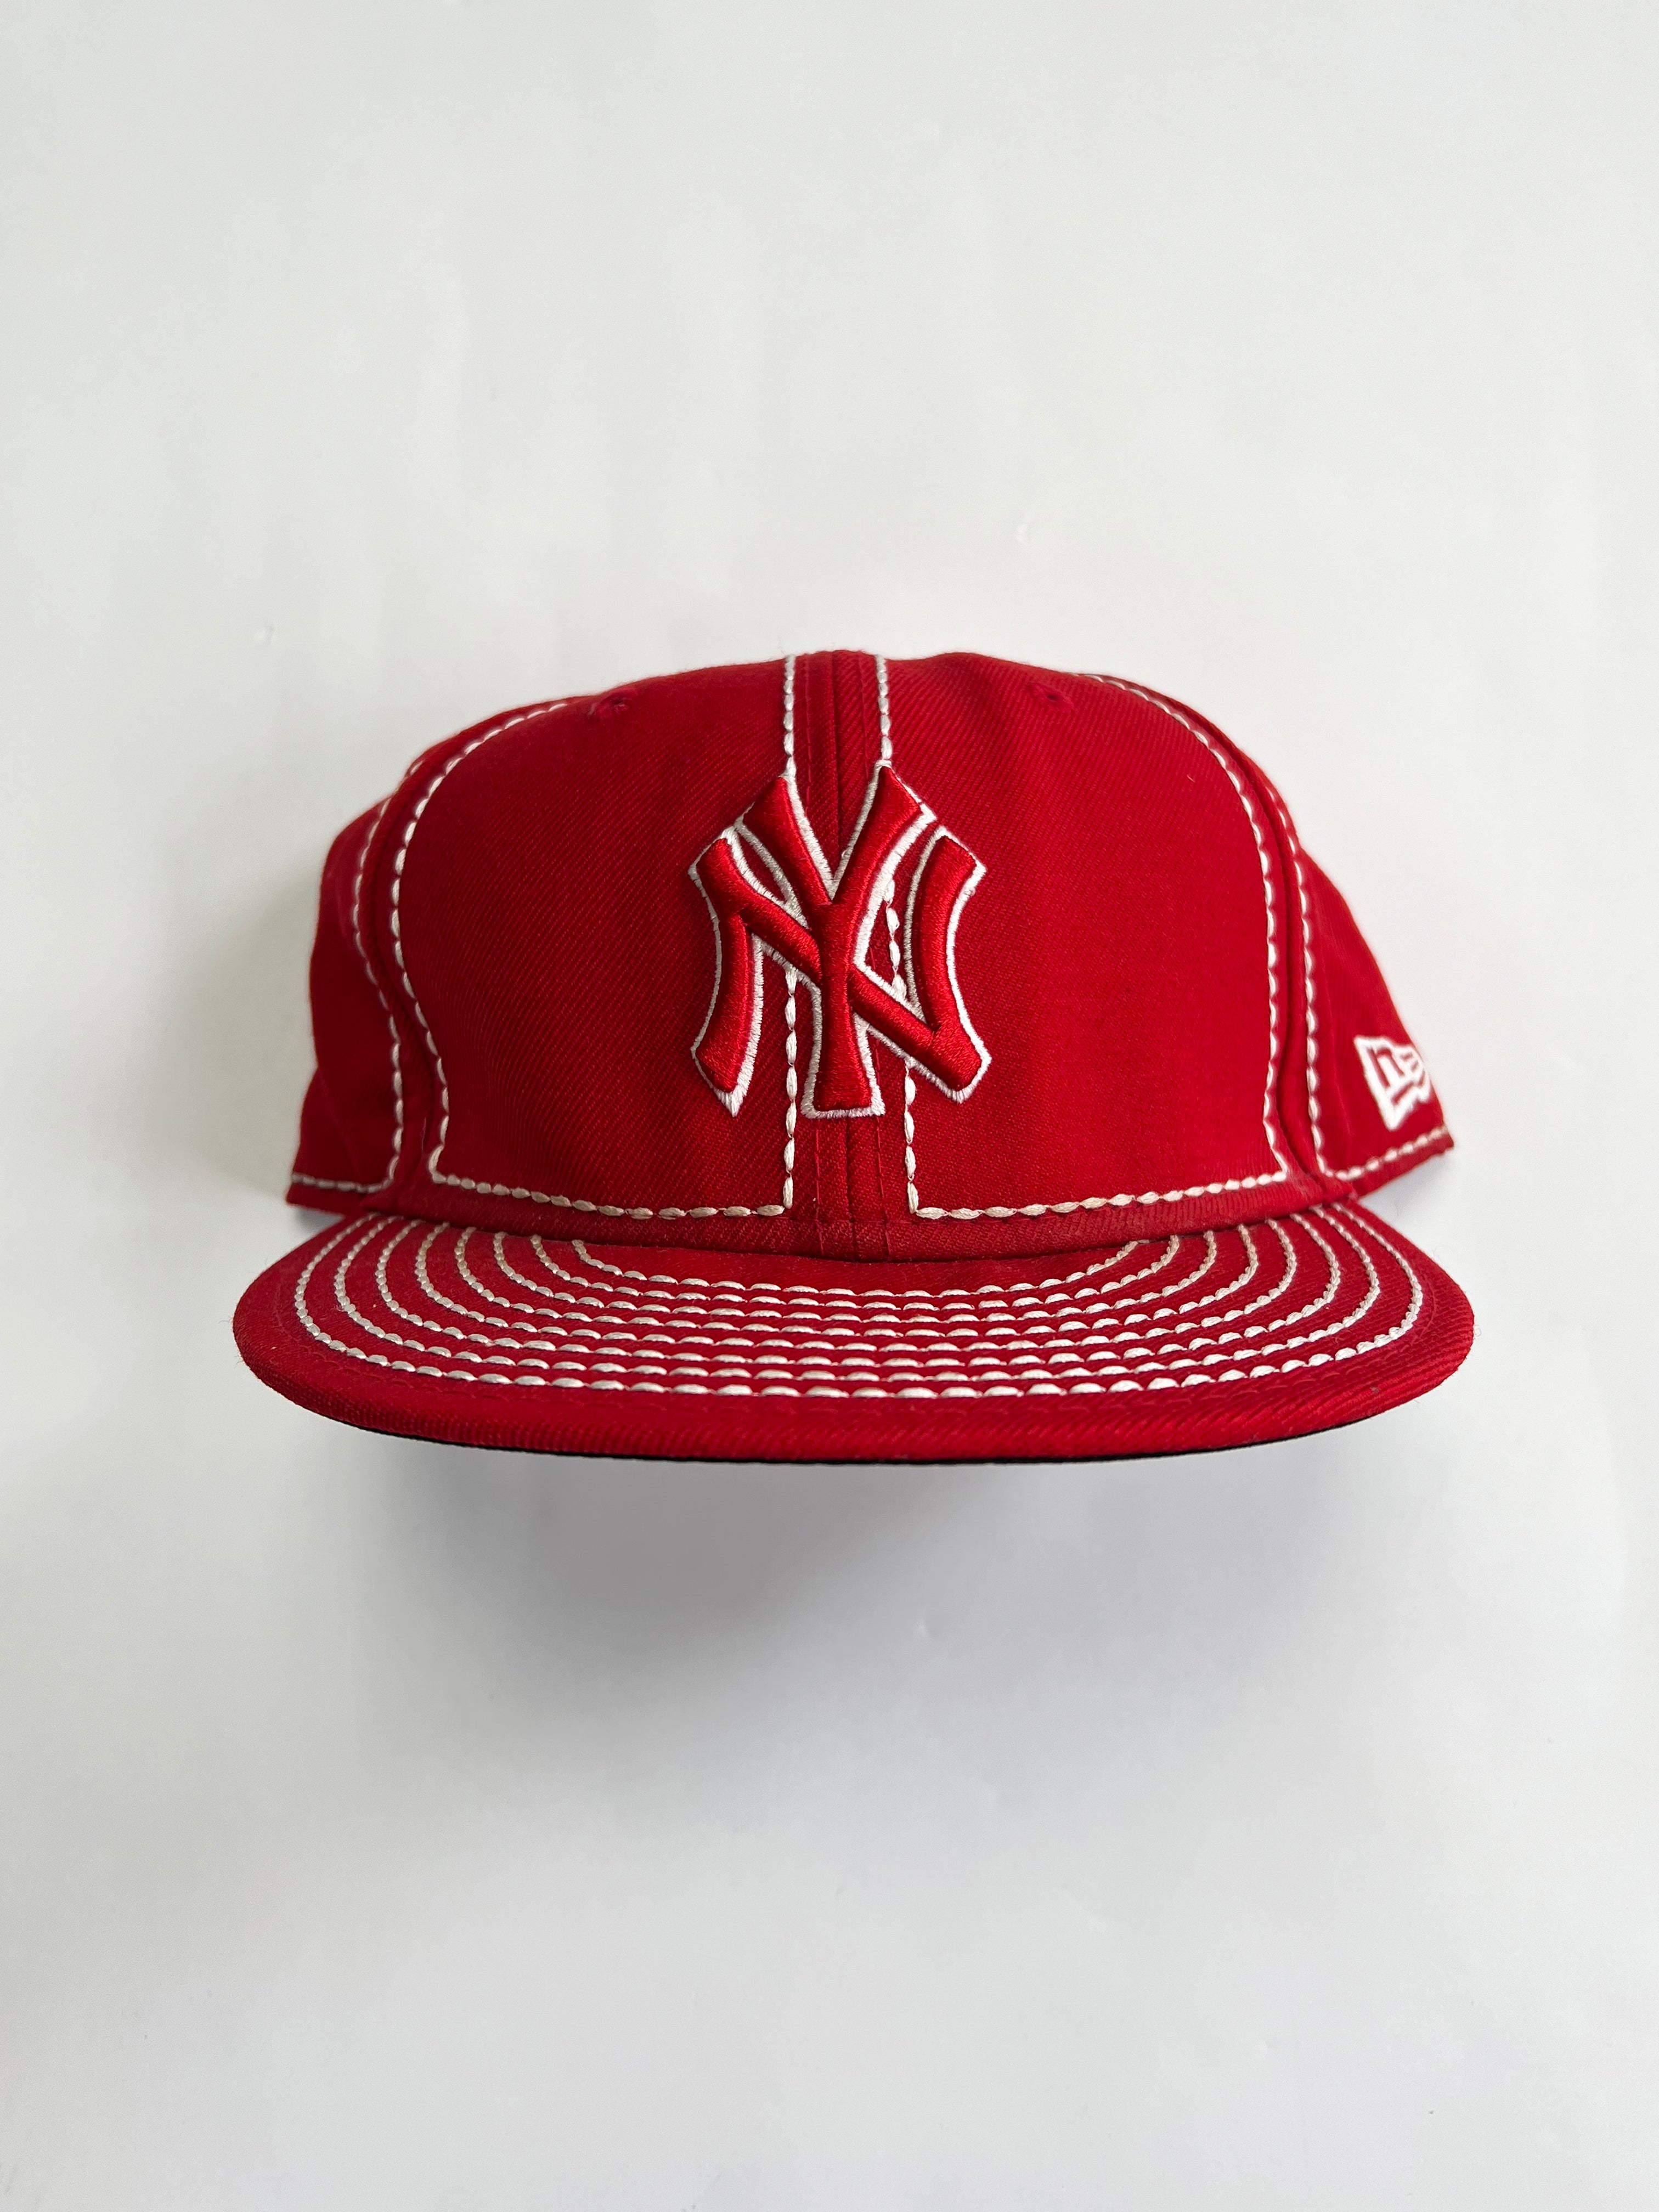 New Era Red White Stitch Hat 00's